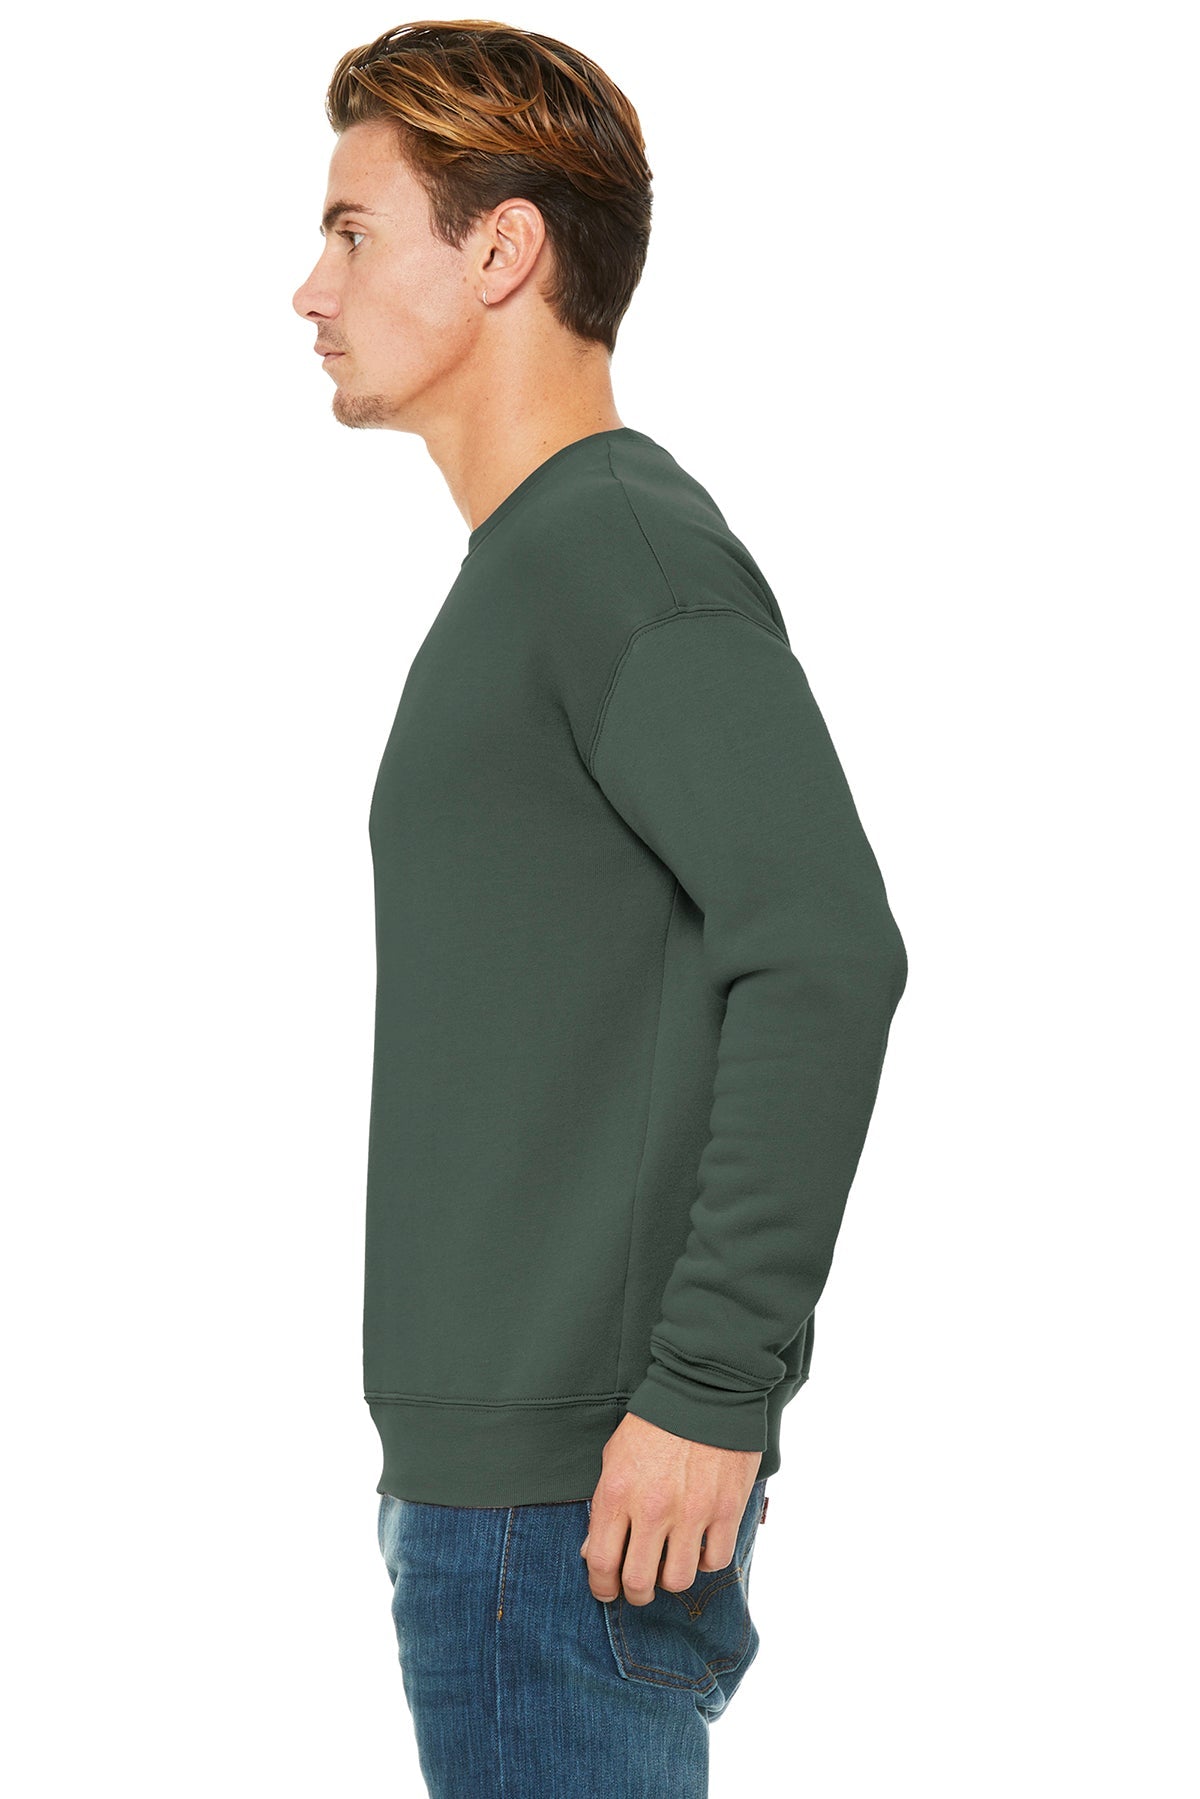 bella + canvas_3945_military green_company_logo_sweatshirts